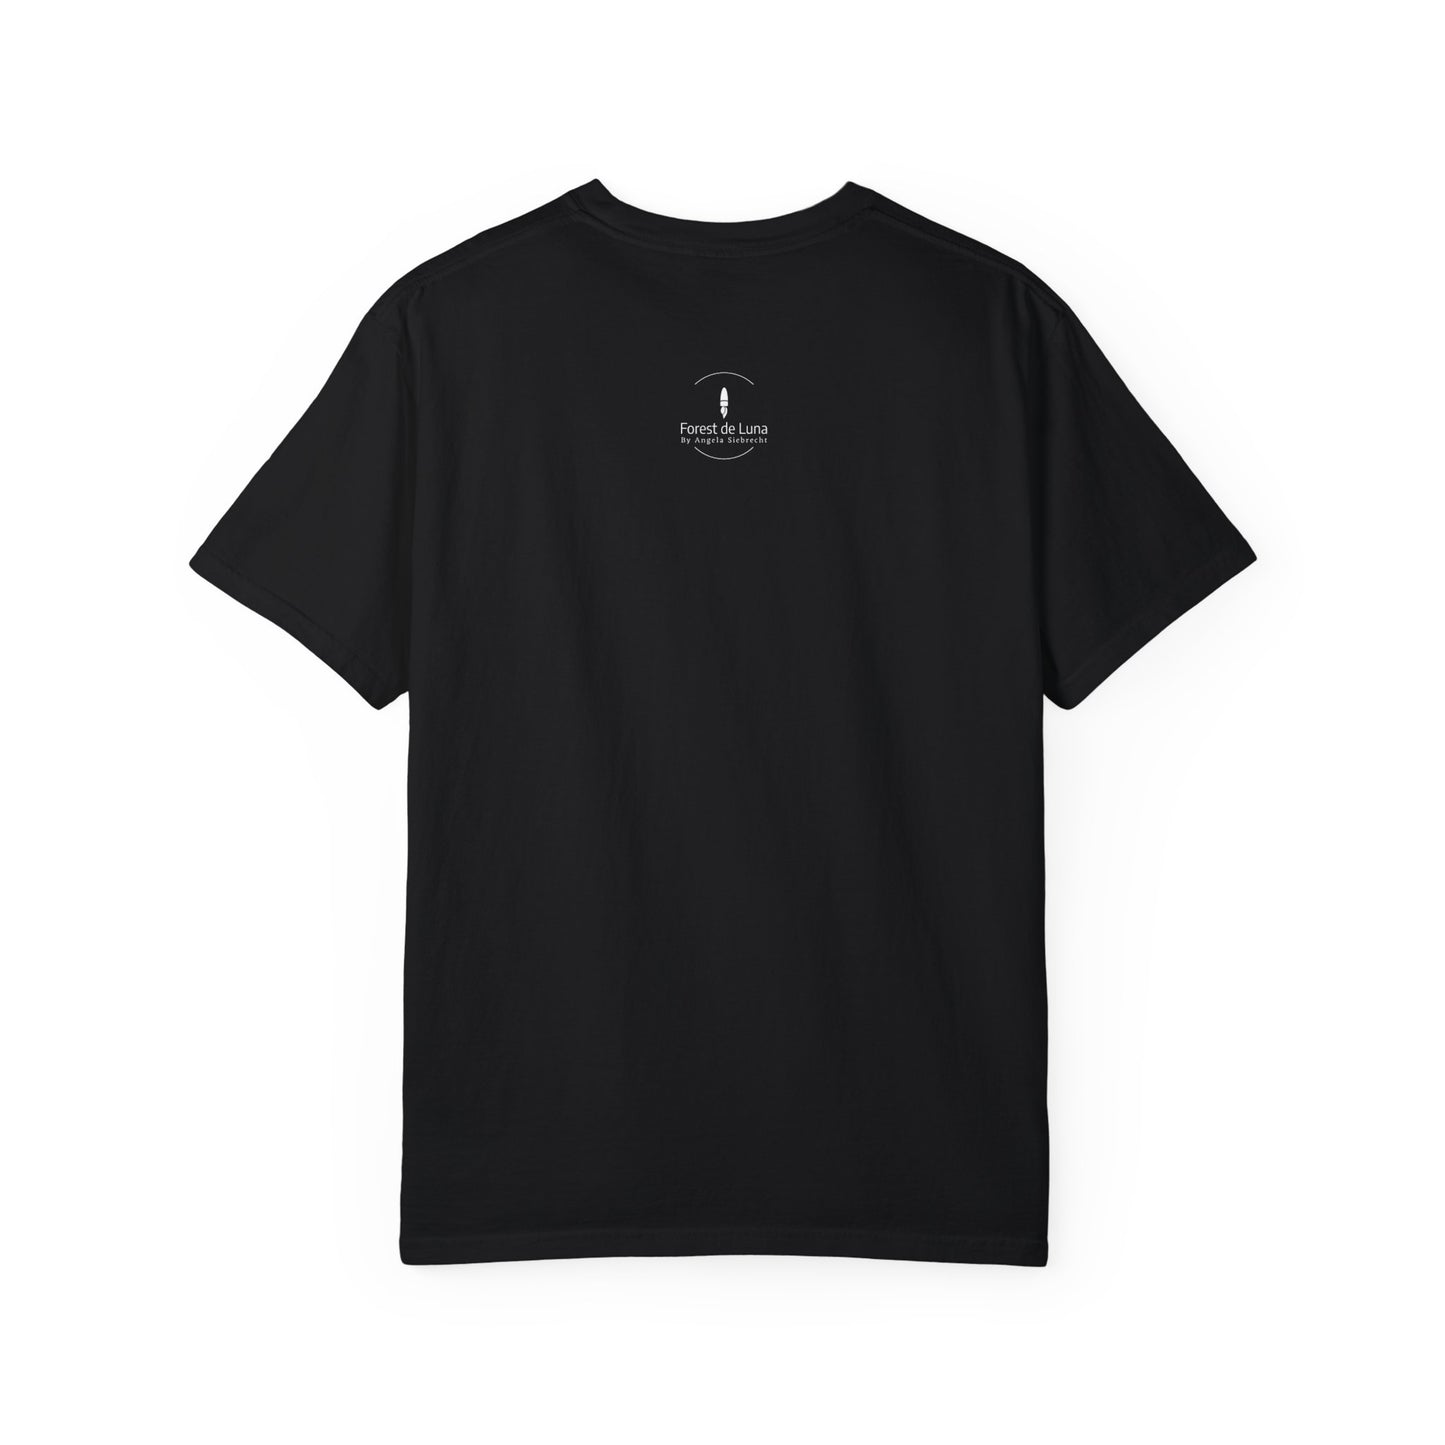 Black Unisex Garment-Dyed T-shirt Exclusive "Forest de Luna" T-Shirt by Angela Siebrecht